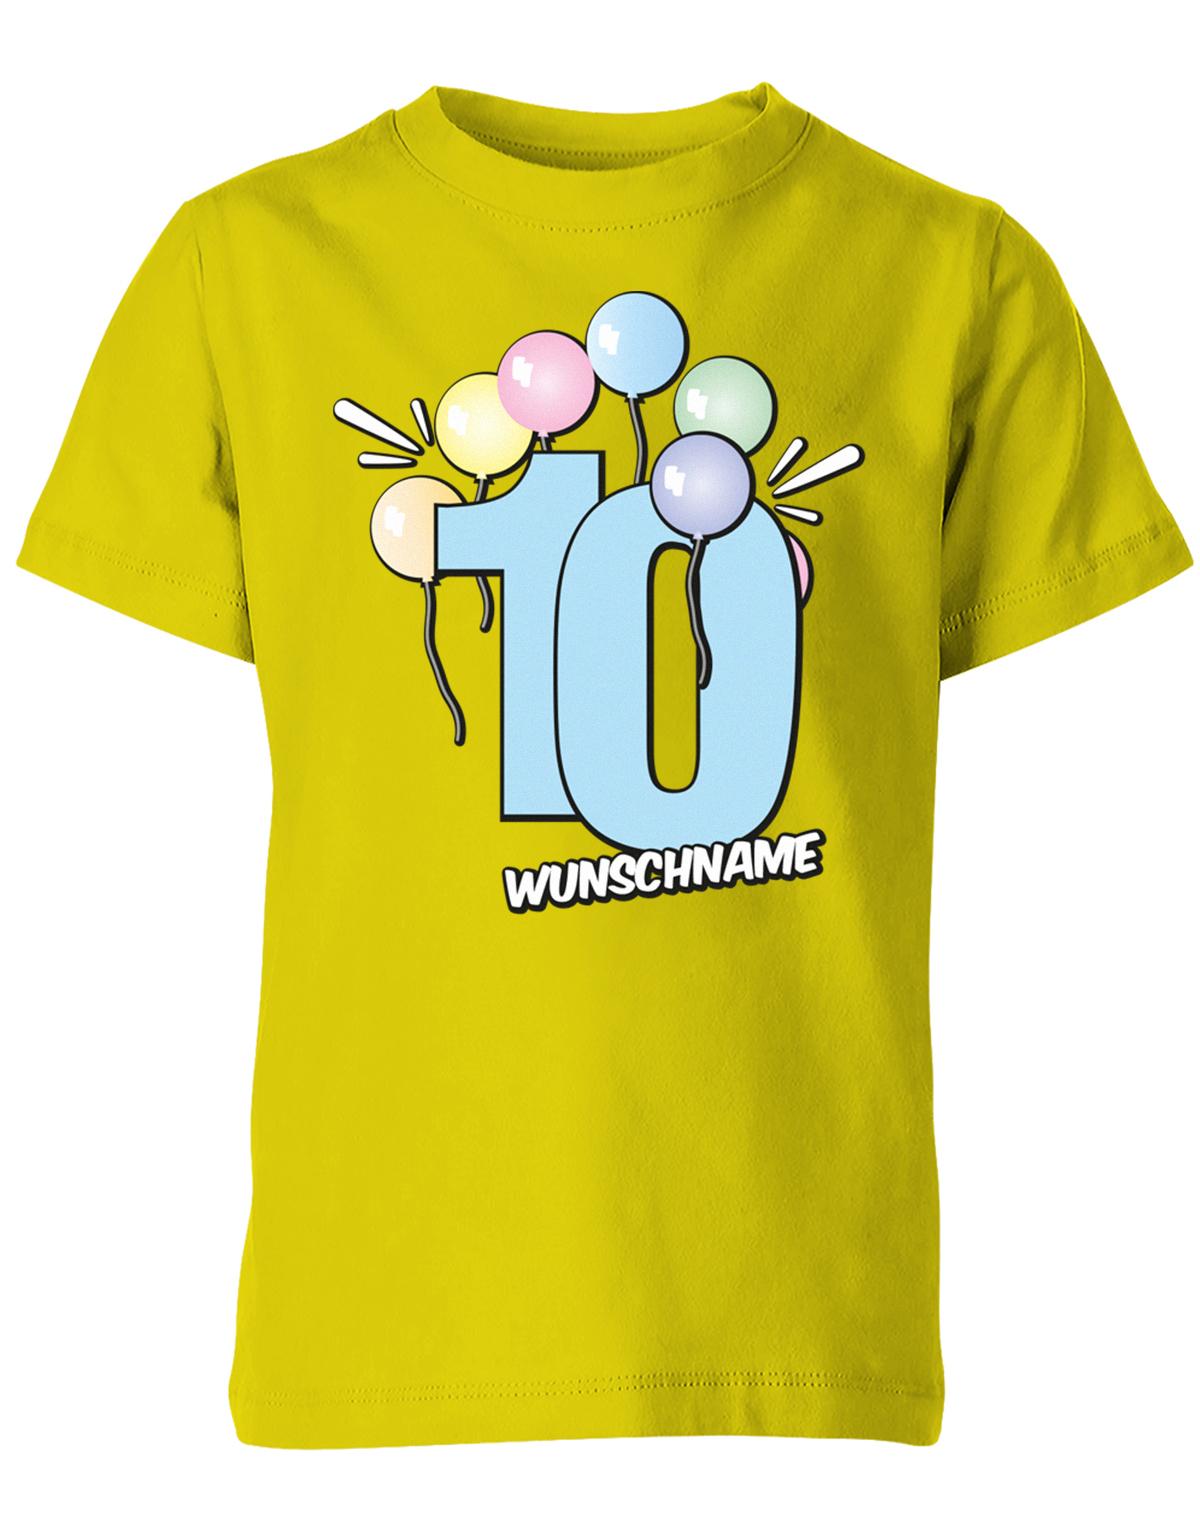 Luftballons-pastell-10-geburtstag-wunschname-kinder-shirt-gelb